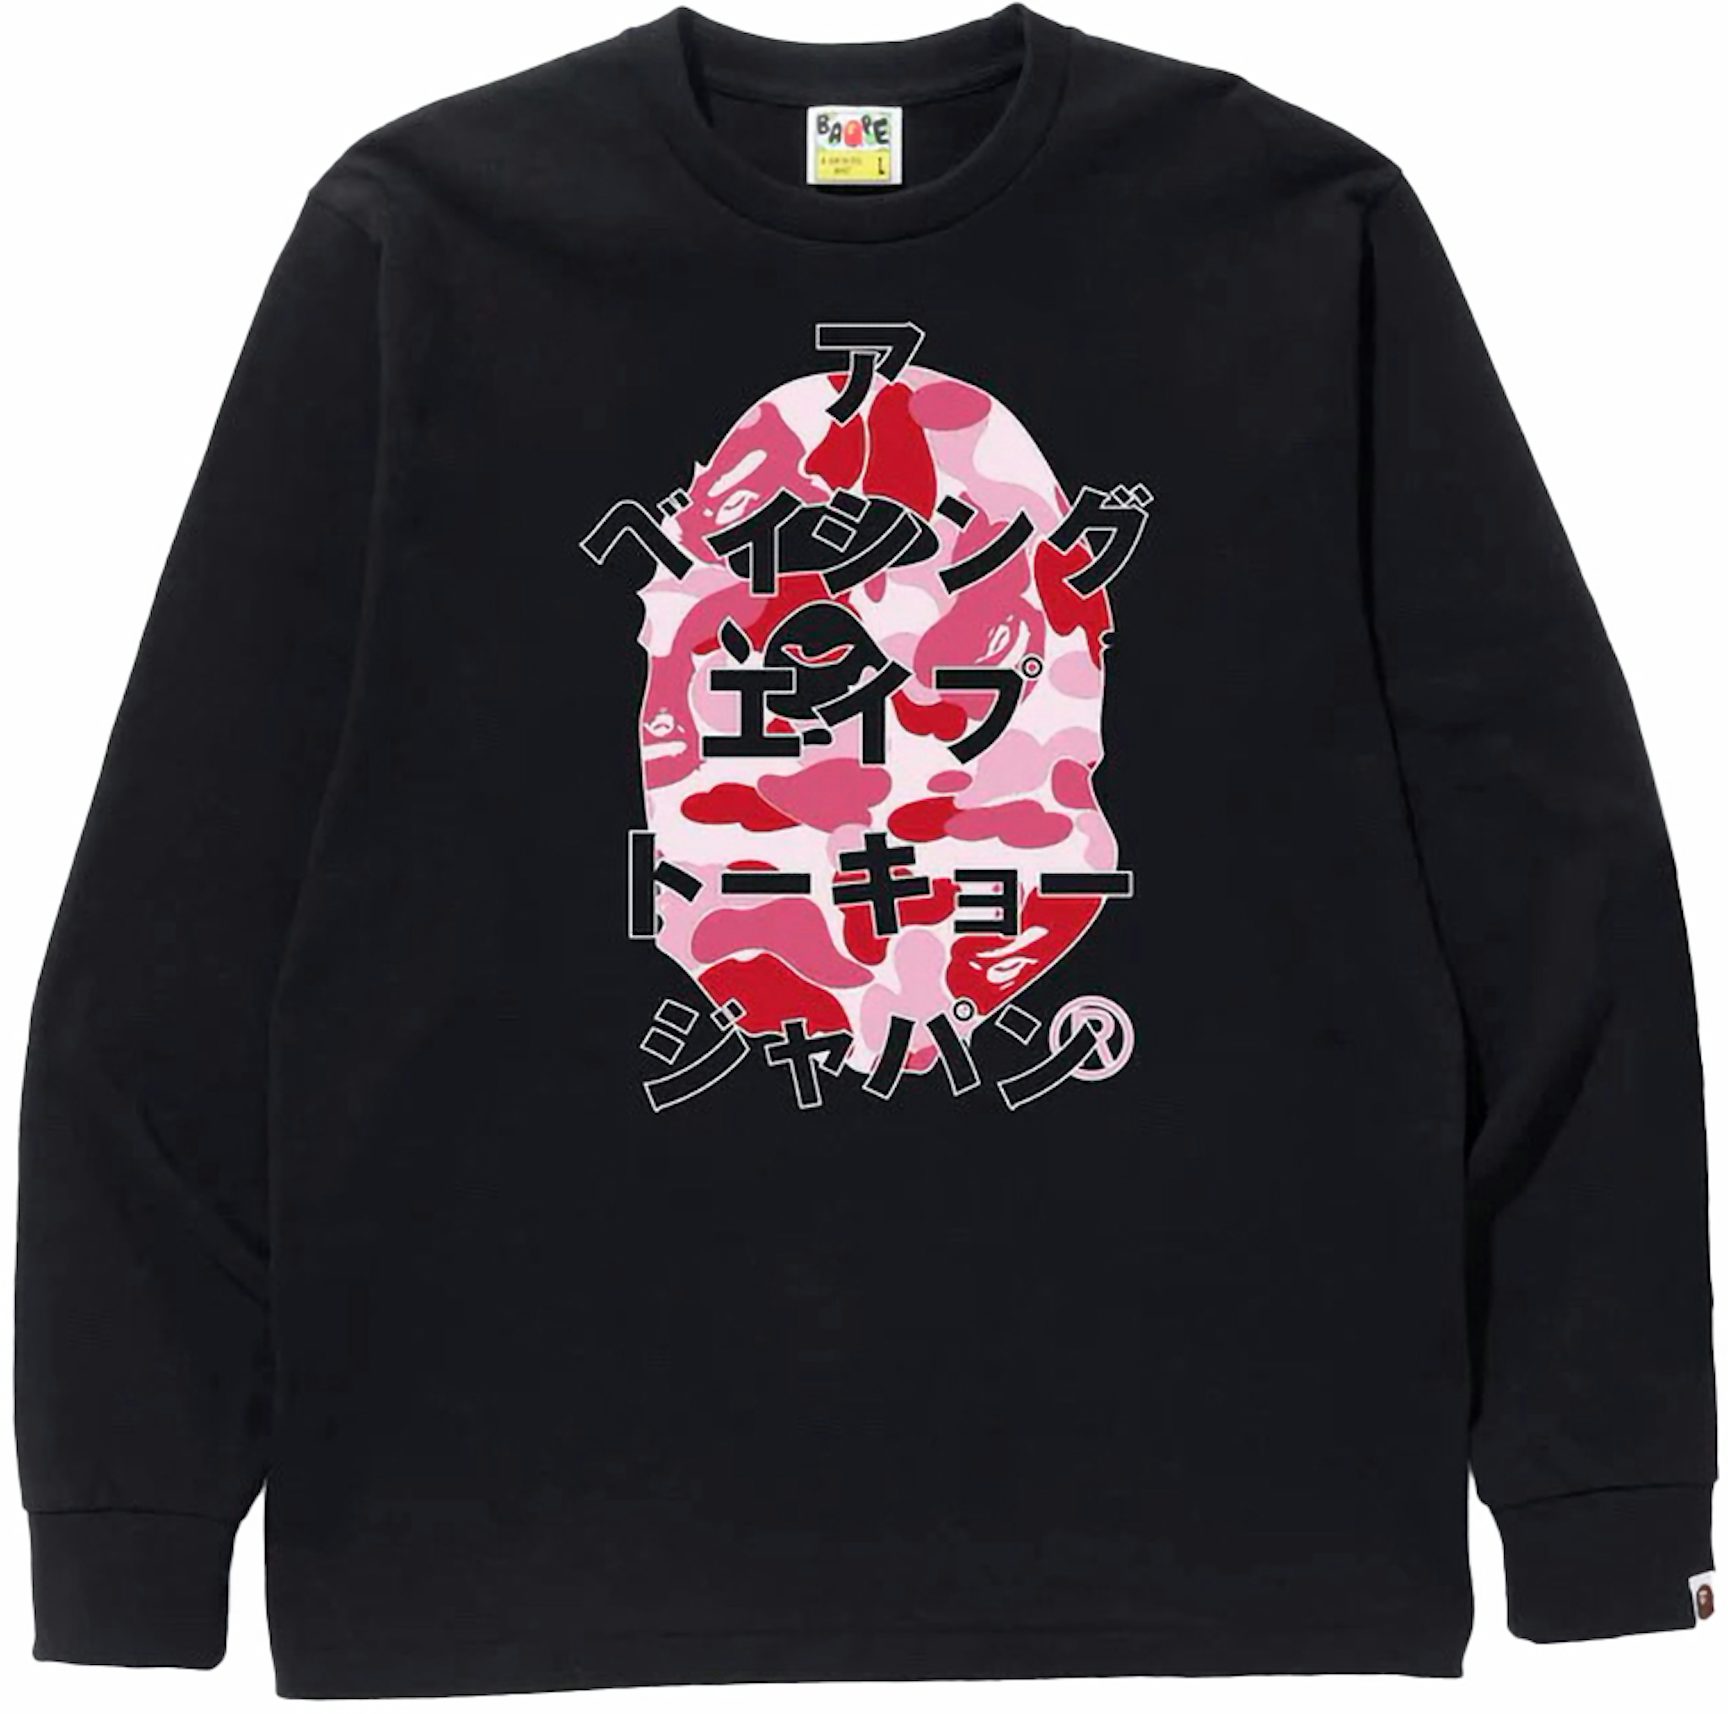 SUPREME x BAPE Pink ABC Camo Box Logo T-shirt WHITE L Large Japan